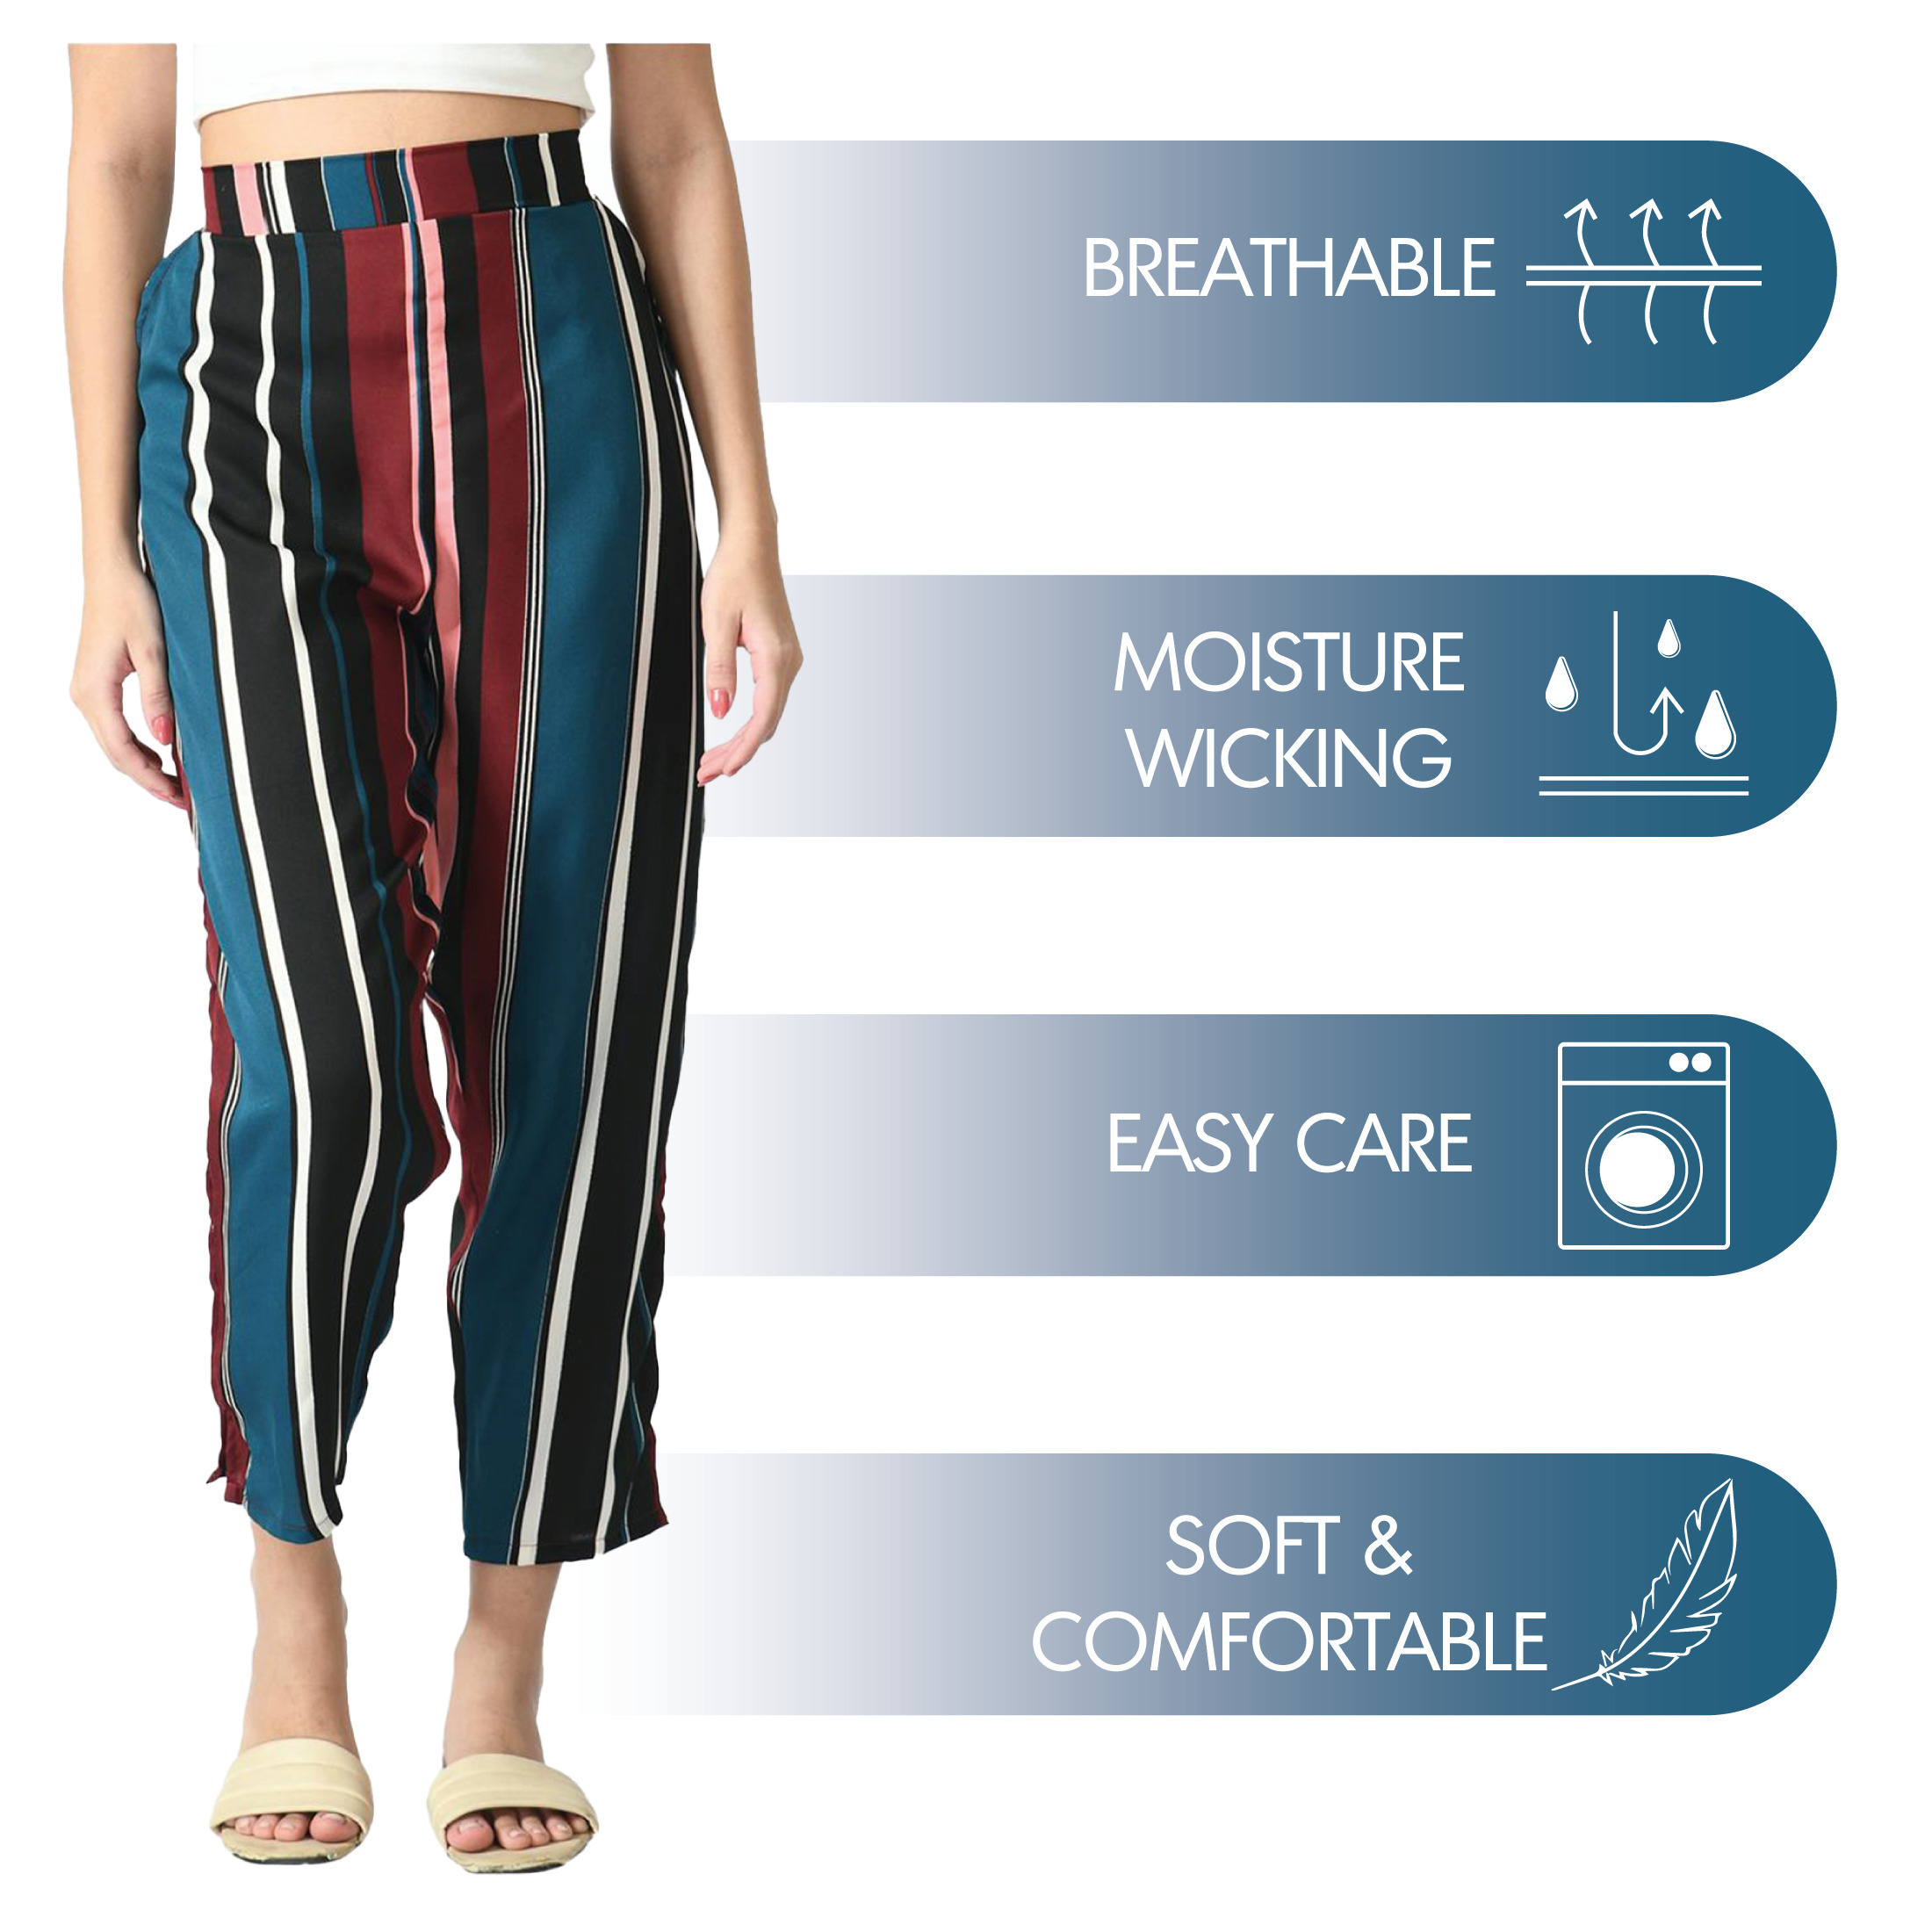 2-Pack: Ladies Summer Soft Fashionable Striped Wide Open Boho Leg Palazzo Pants - Medium